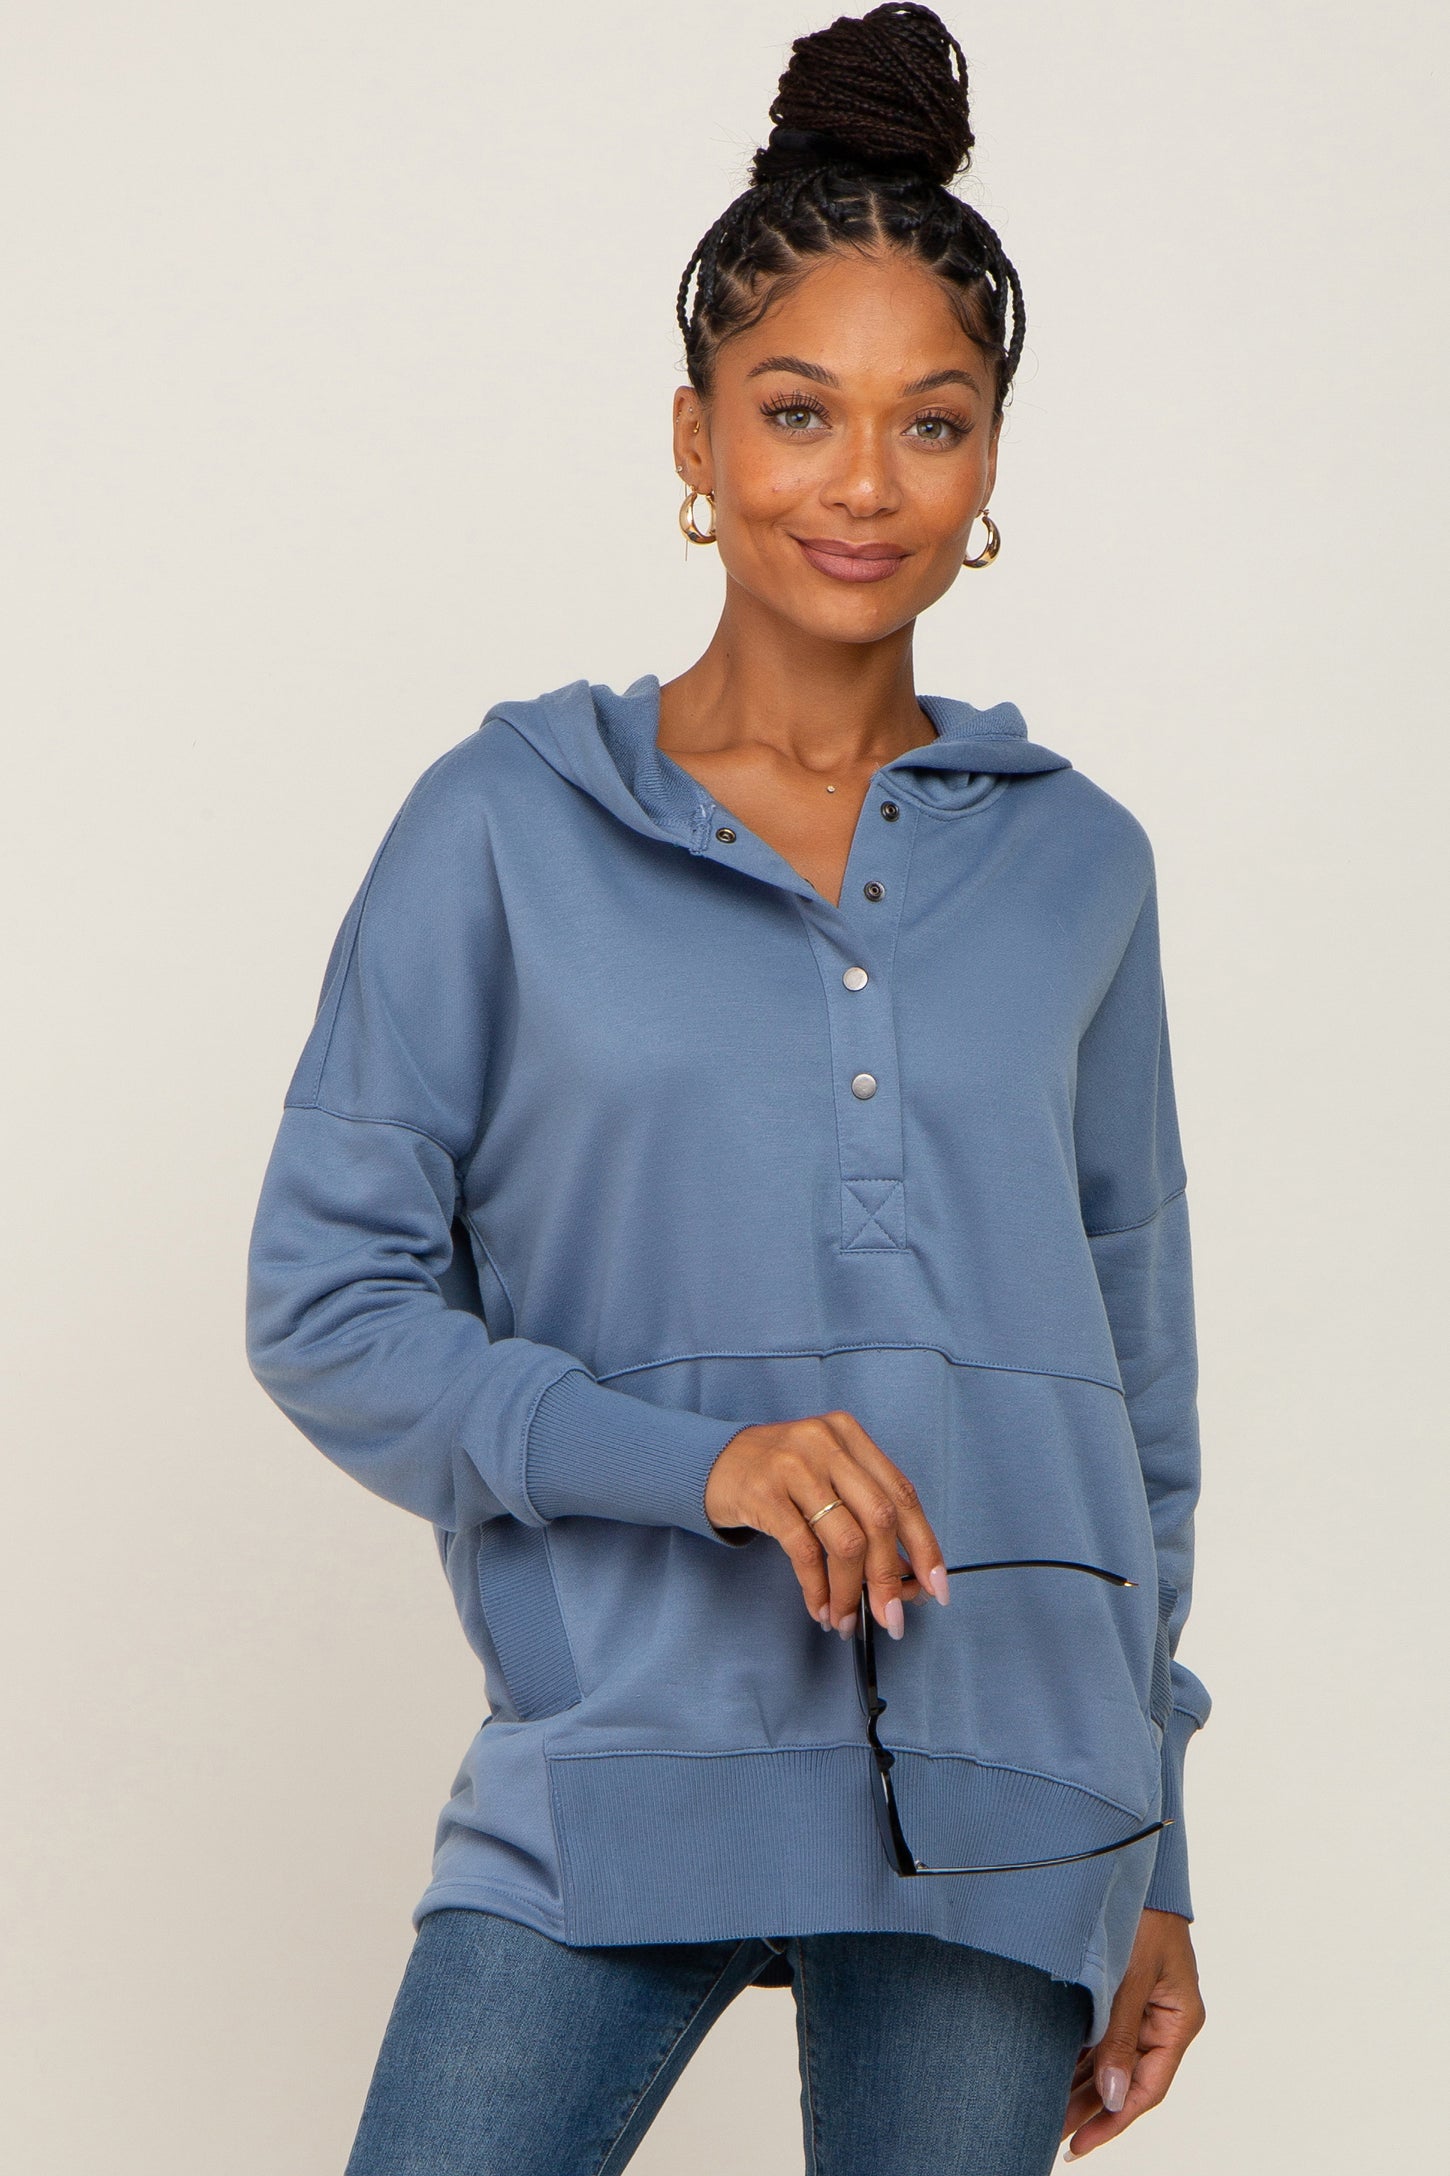 Nursing Sweatshirt With Pockets -Hidden Zipper- Colorblock Blue/Gray (XS)  at  Women's Clothing store